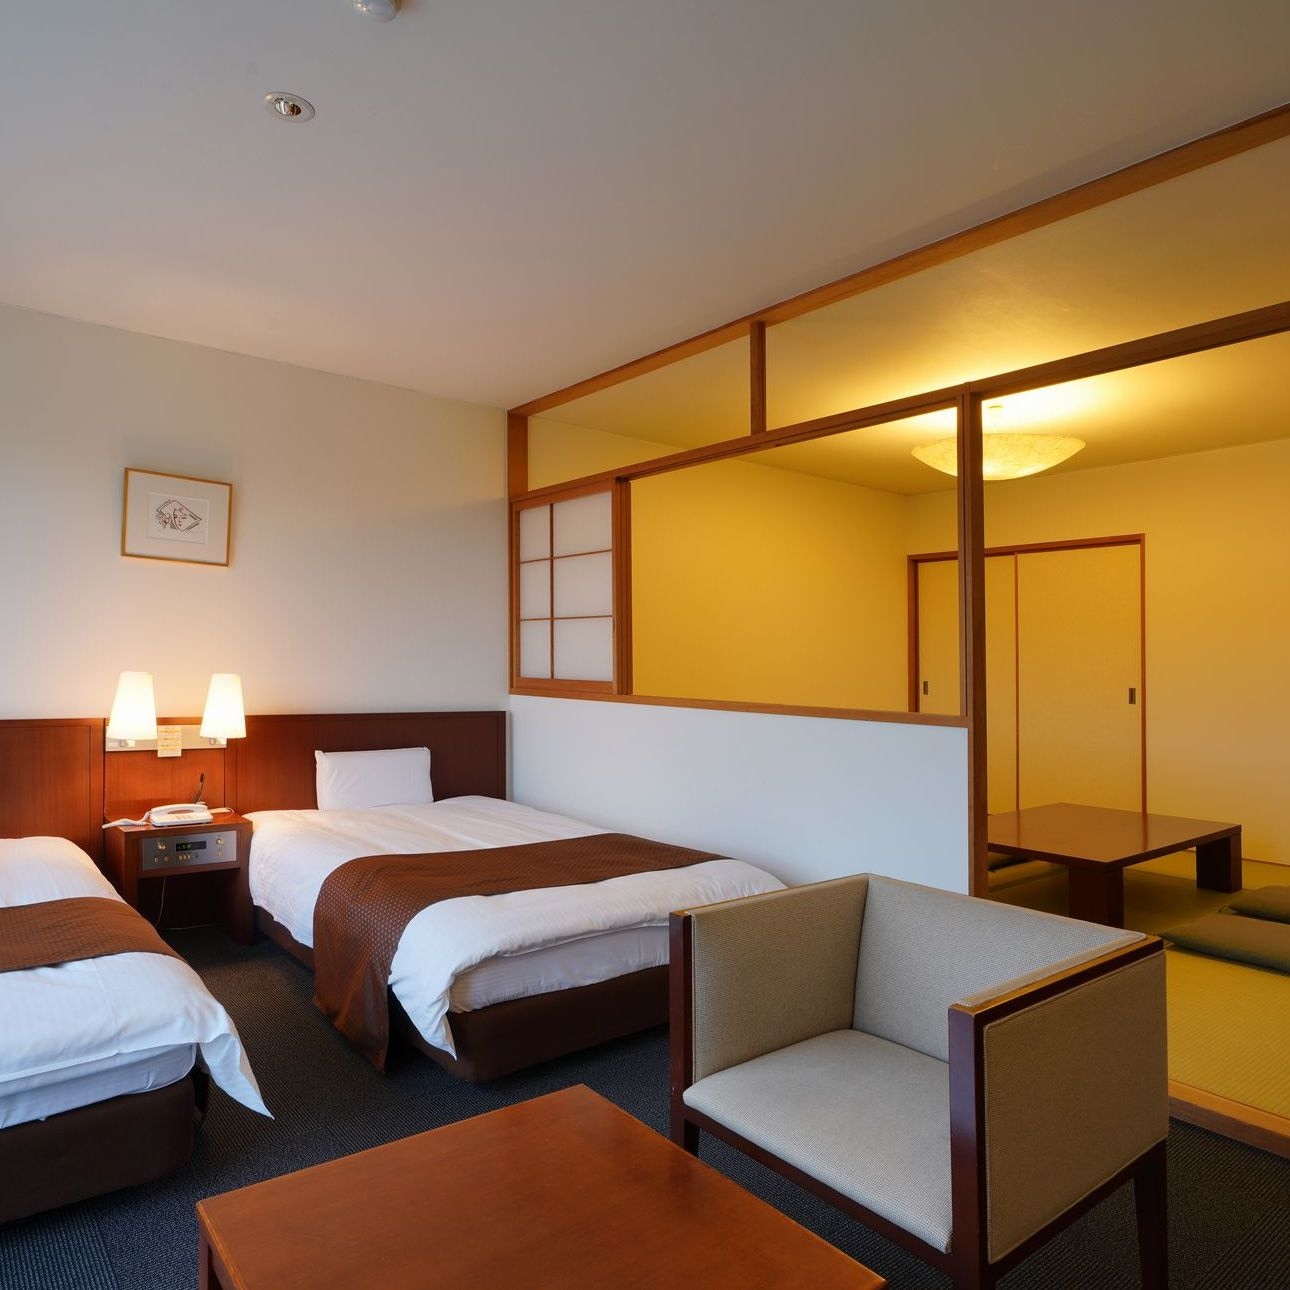 Kamar Hotel Contoh kamar bergaya Jepang-Barat